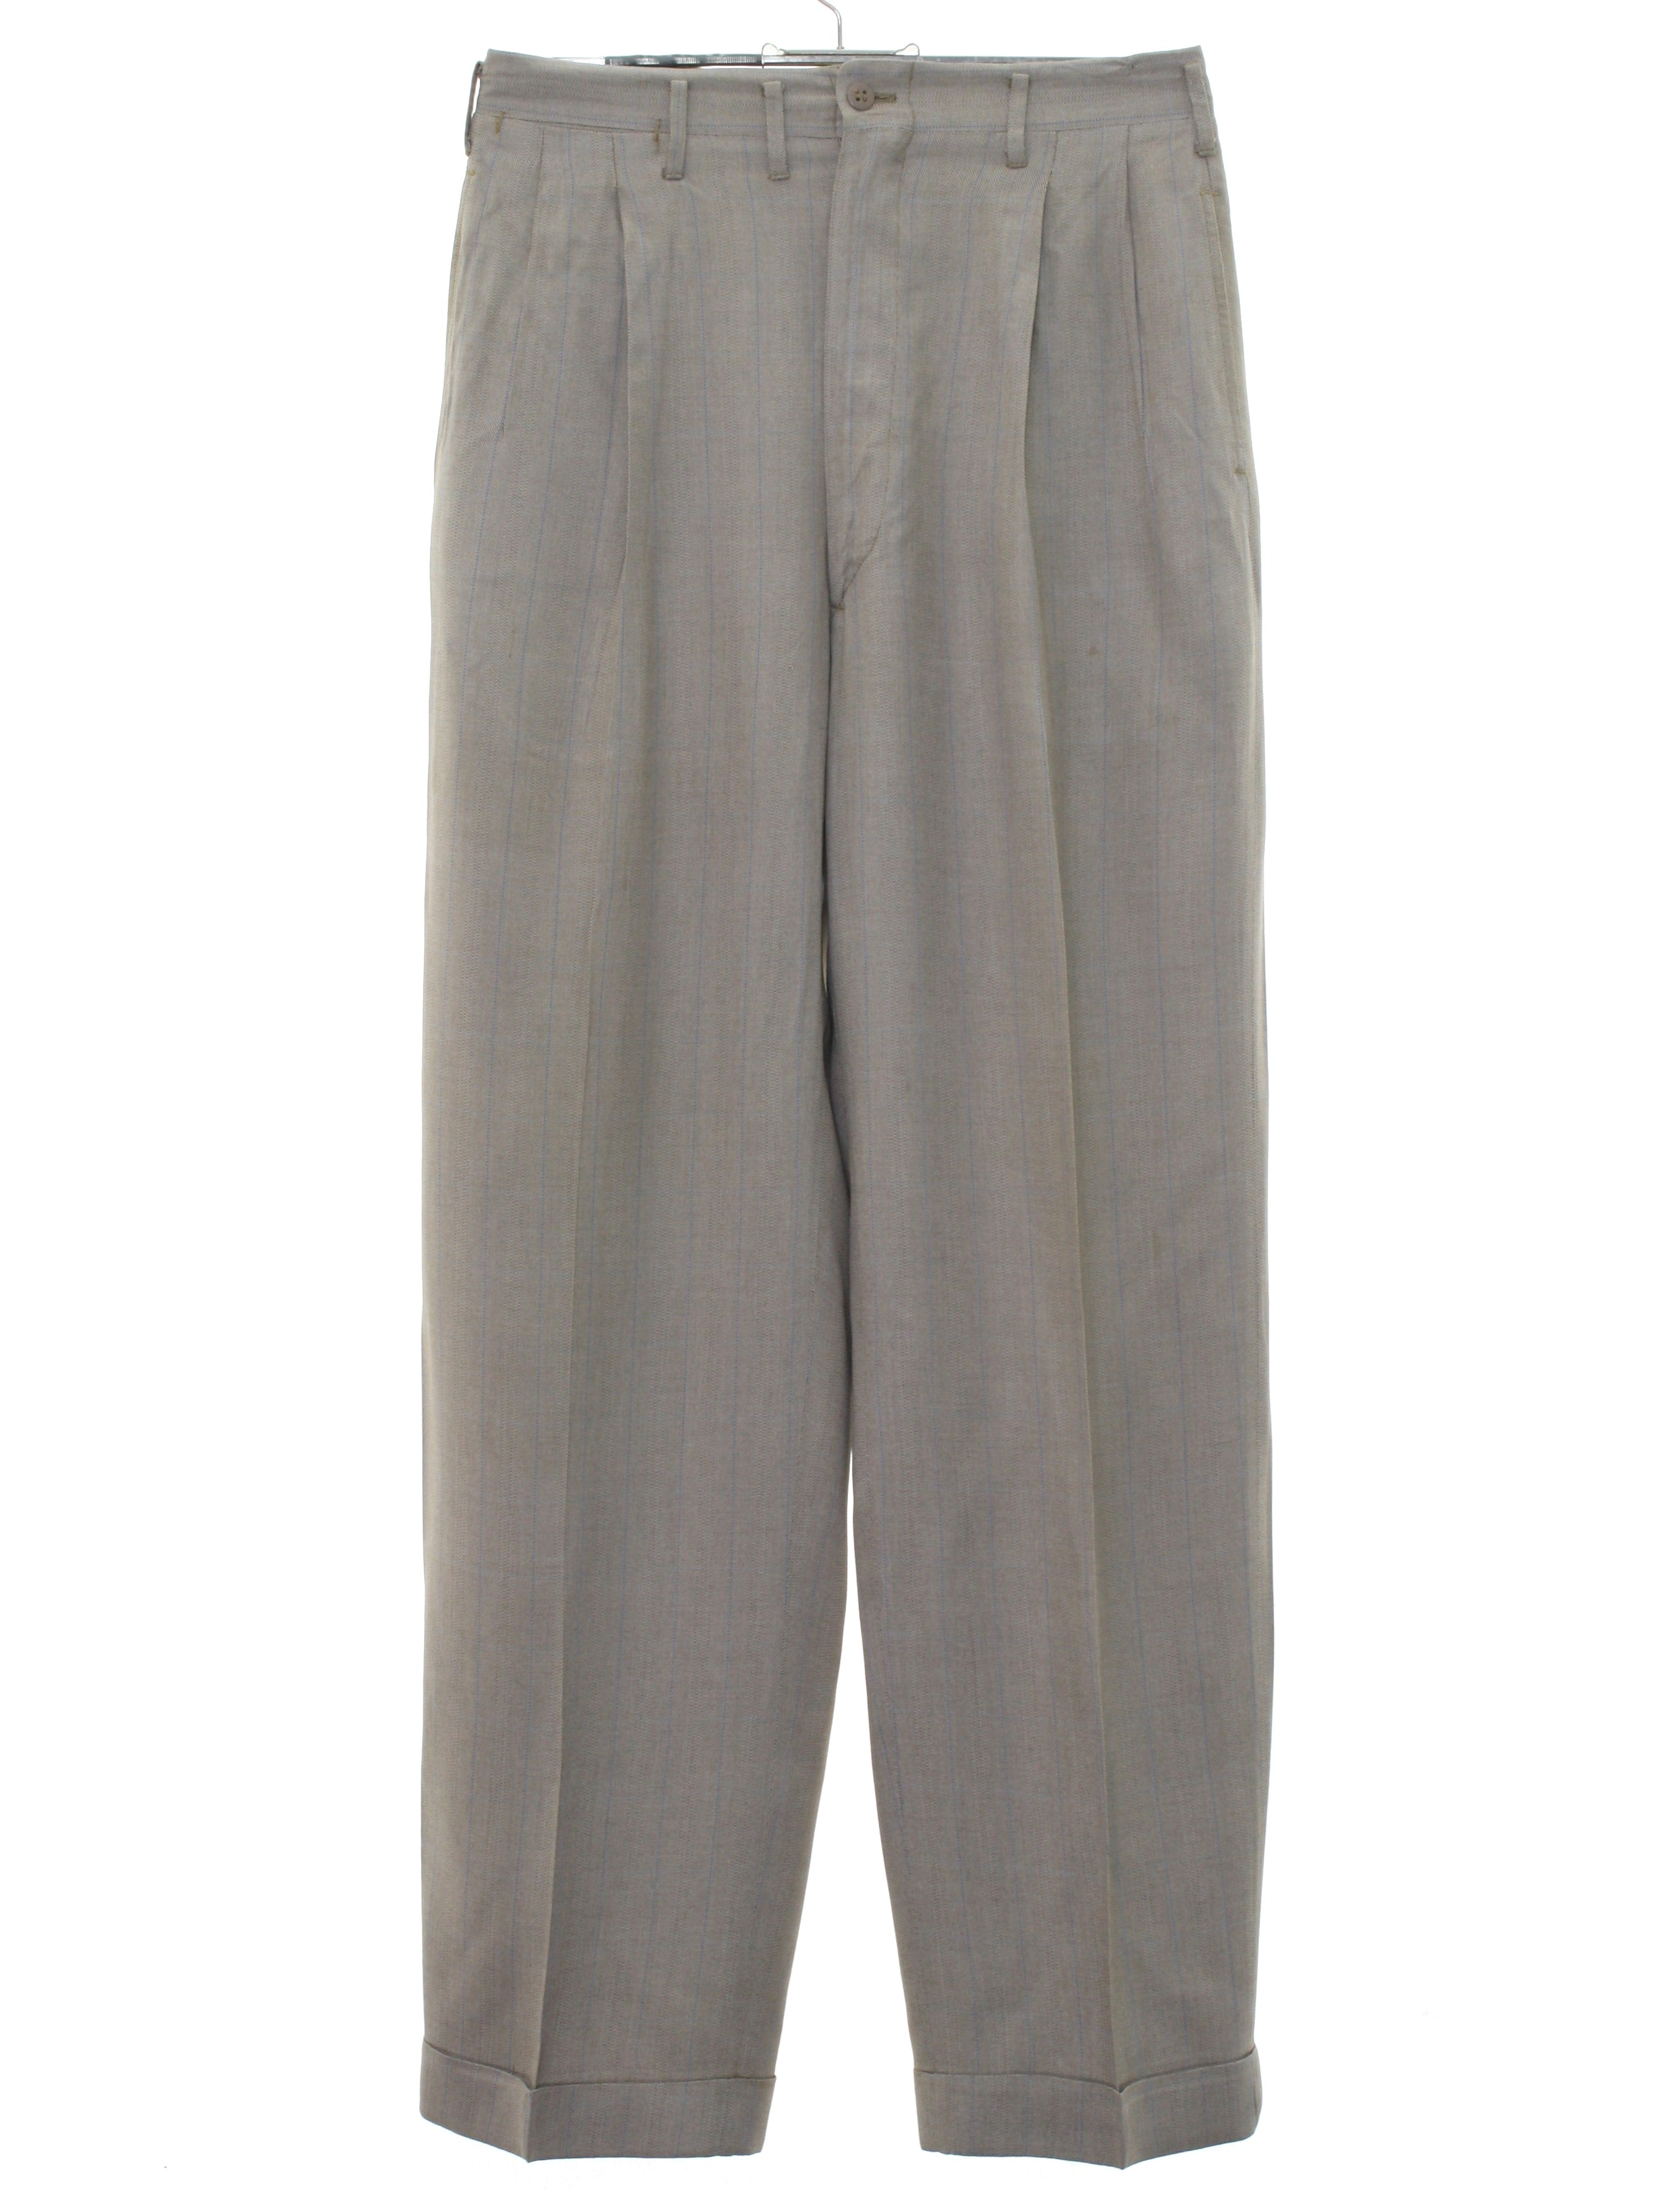 1940s Vintage Pants: Late 40s -No Label- Mens beige background, gray ...